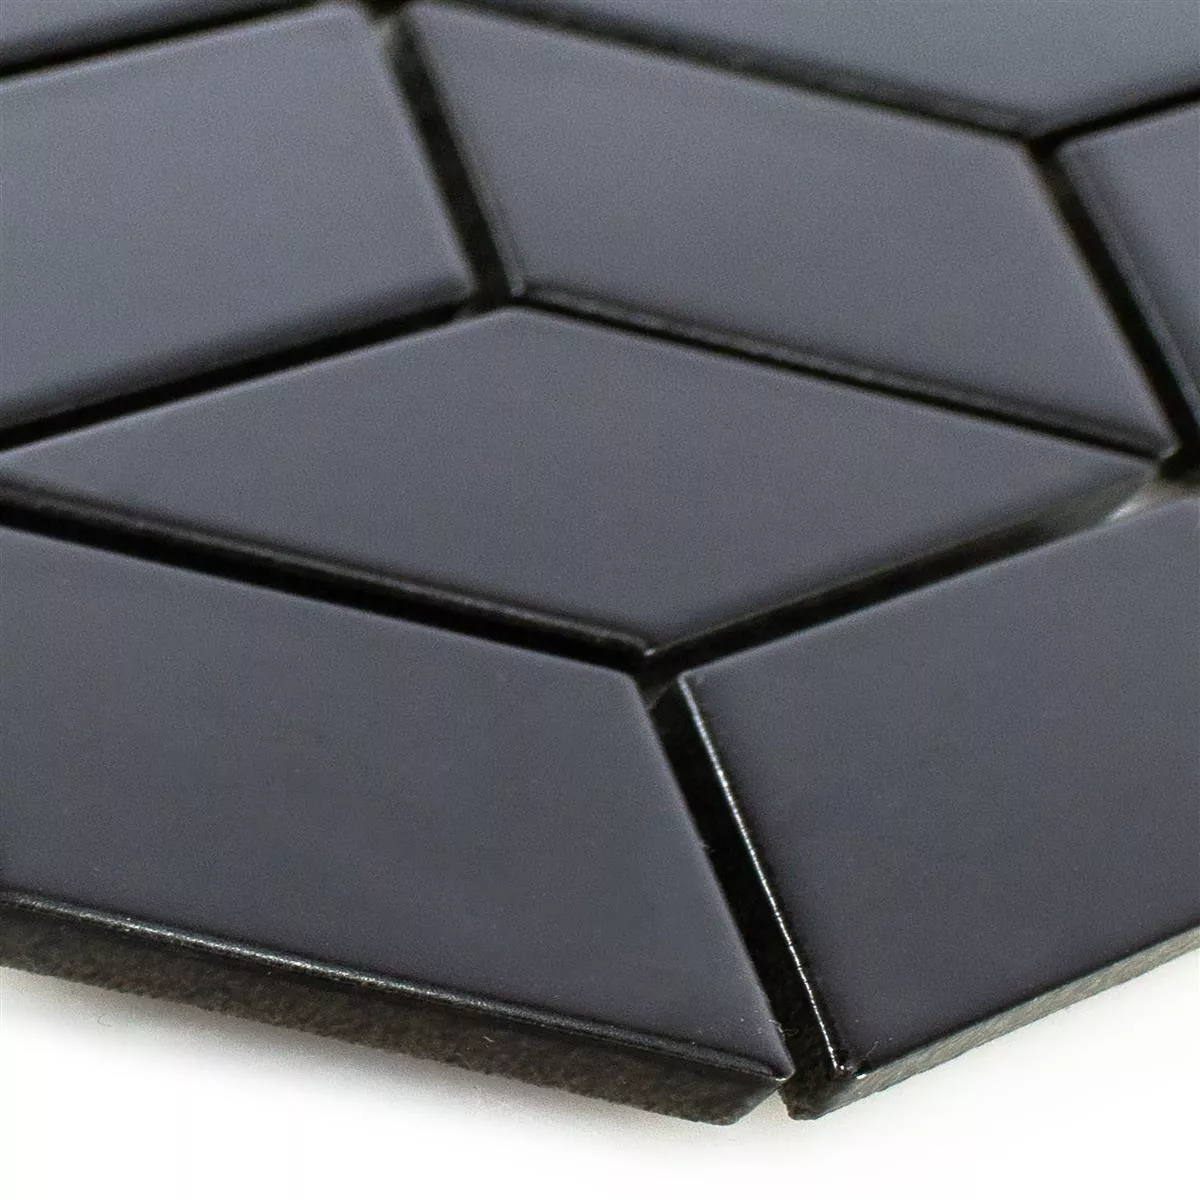 Muestra Cerámica Azulejos De Mosaico Cavalier 3D Cubo Mate Negro